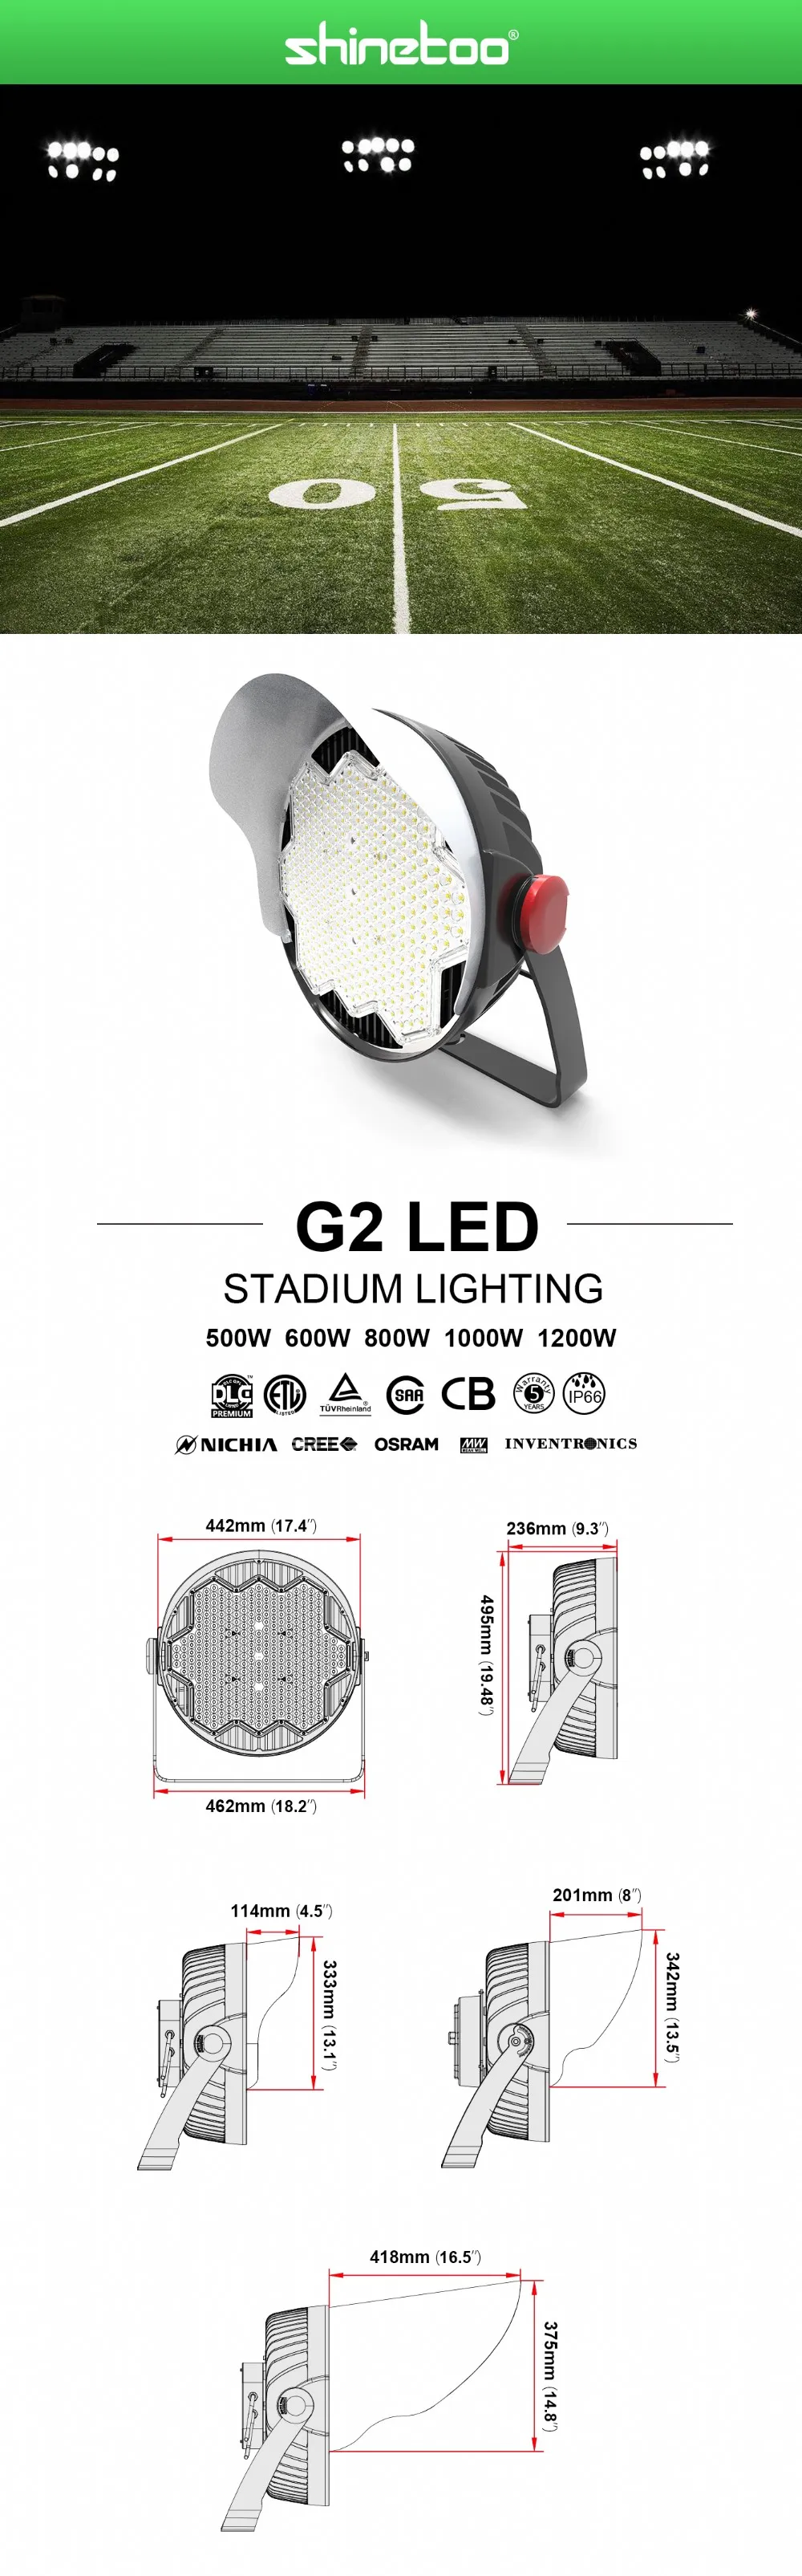 G2 Stadium Lighting